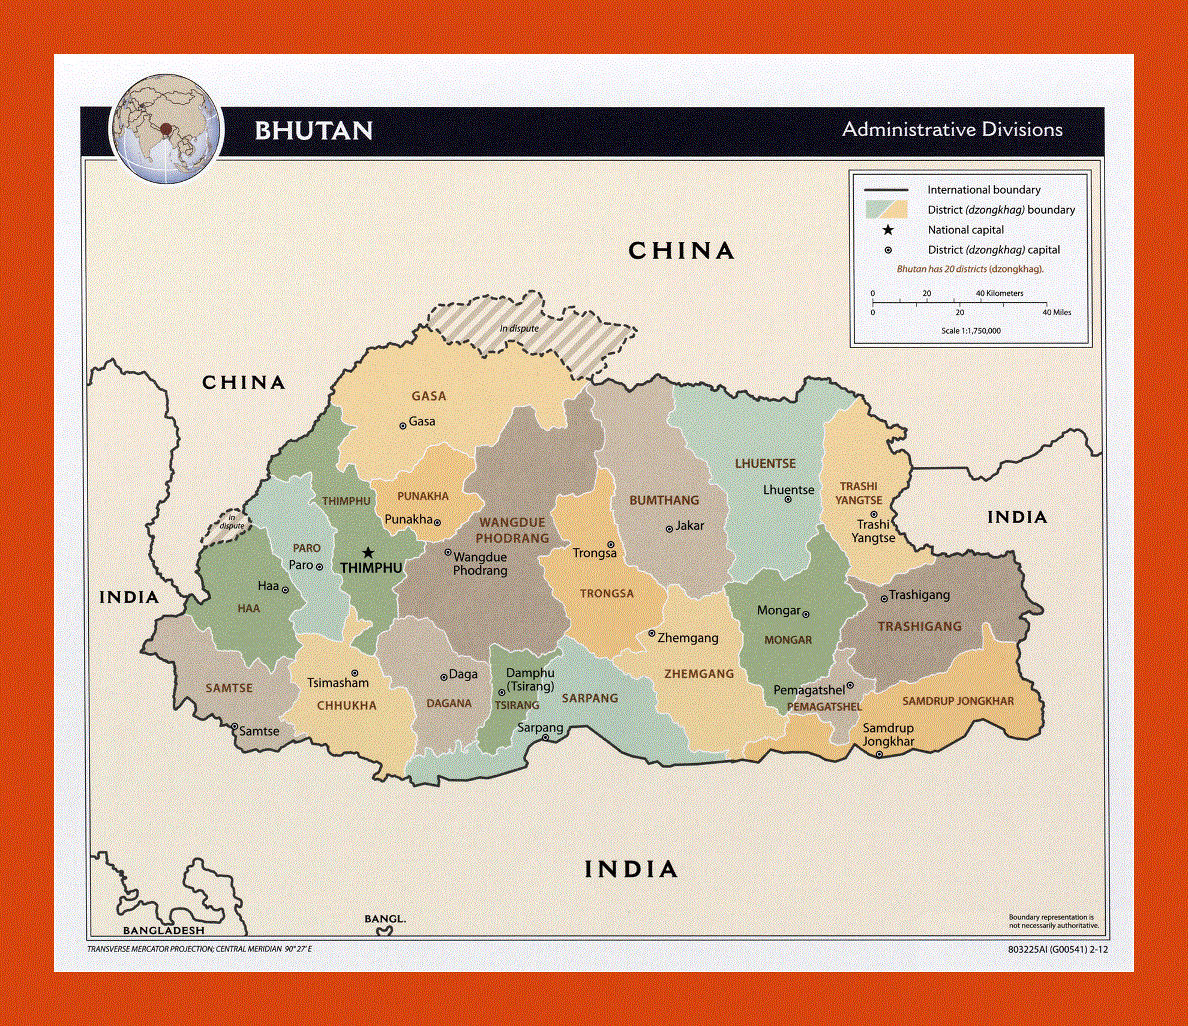 Administrative divisions map of Bhutan - 2012